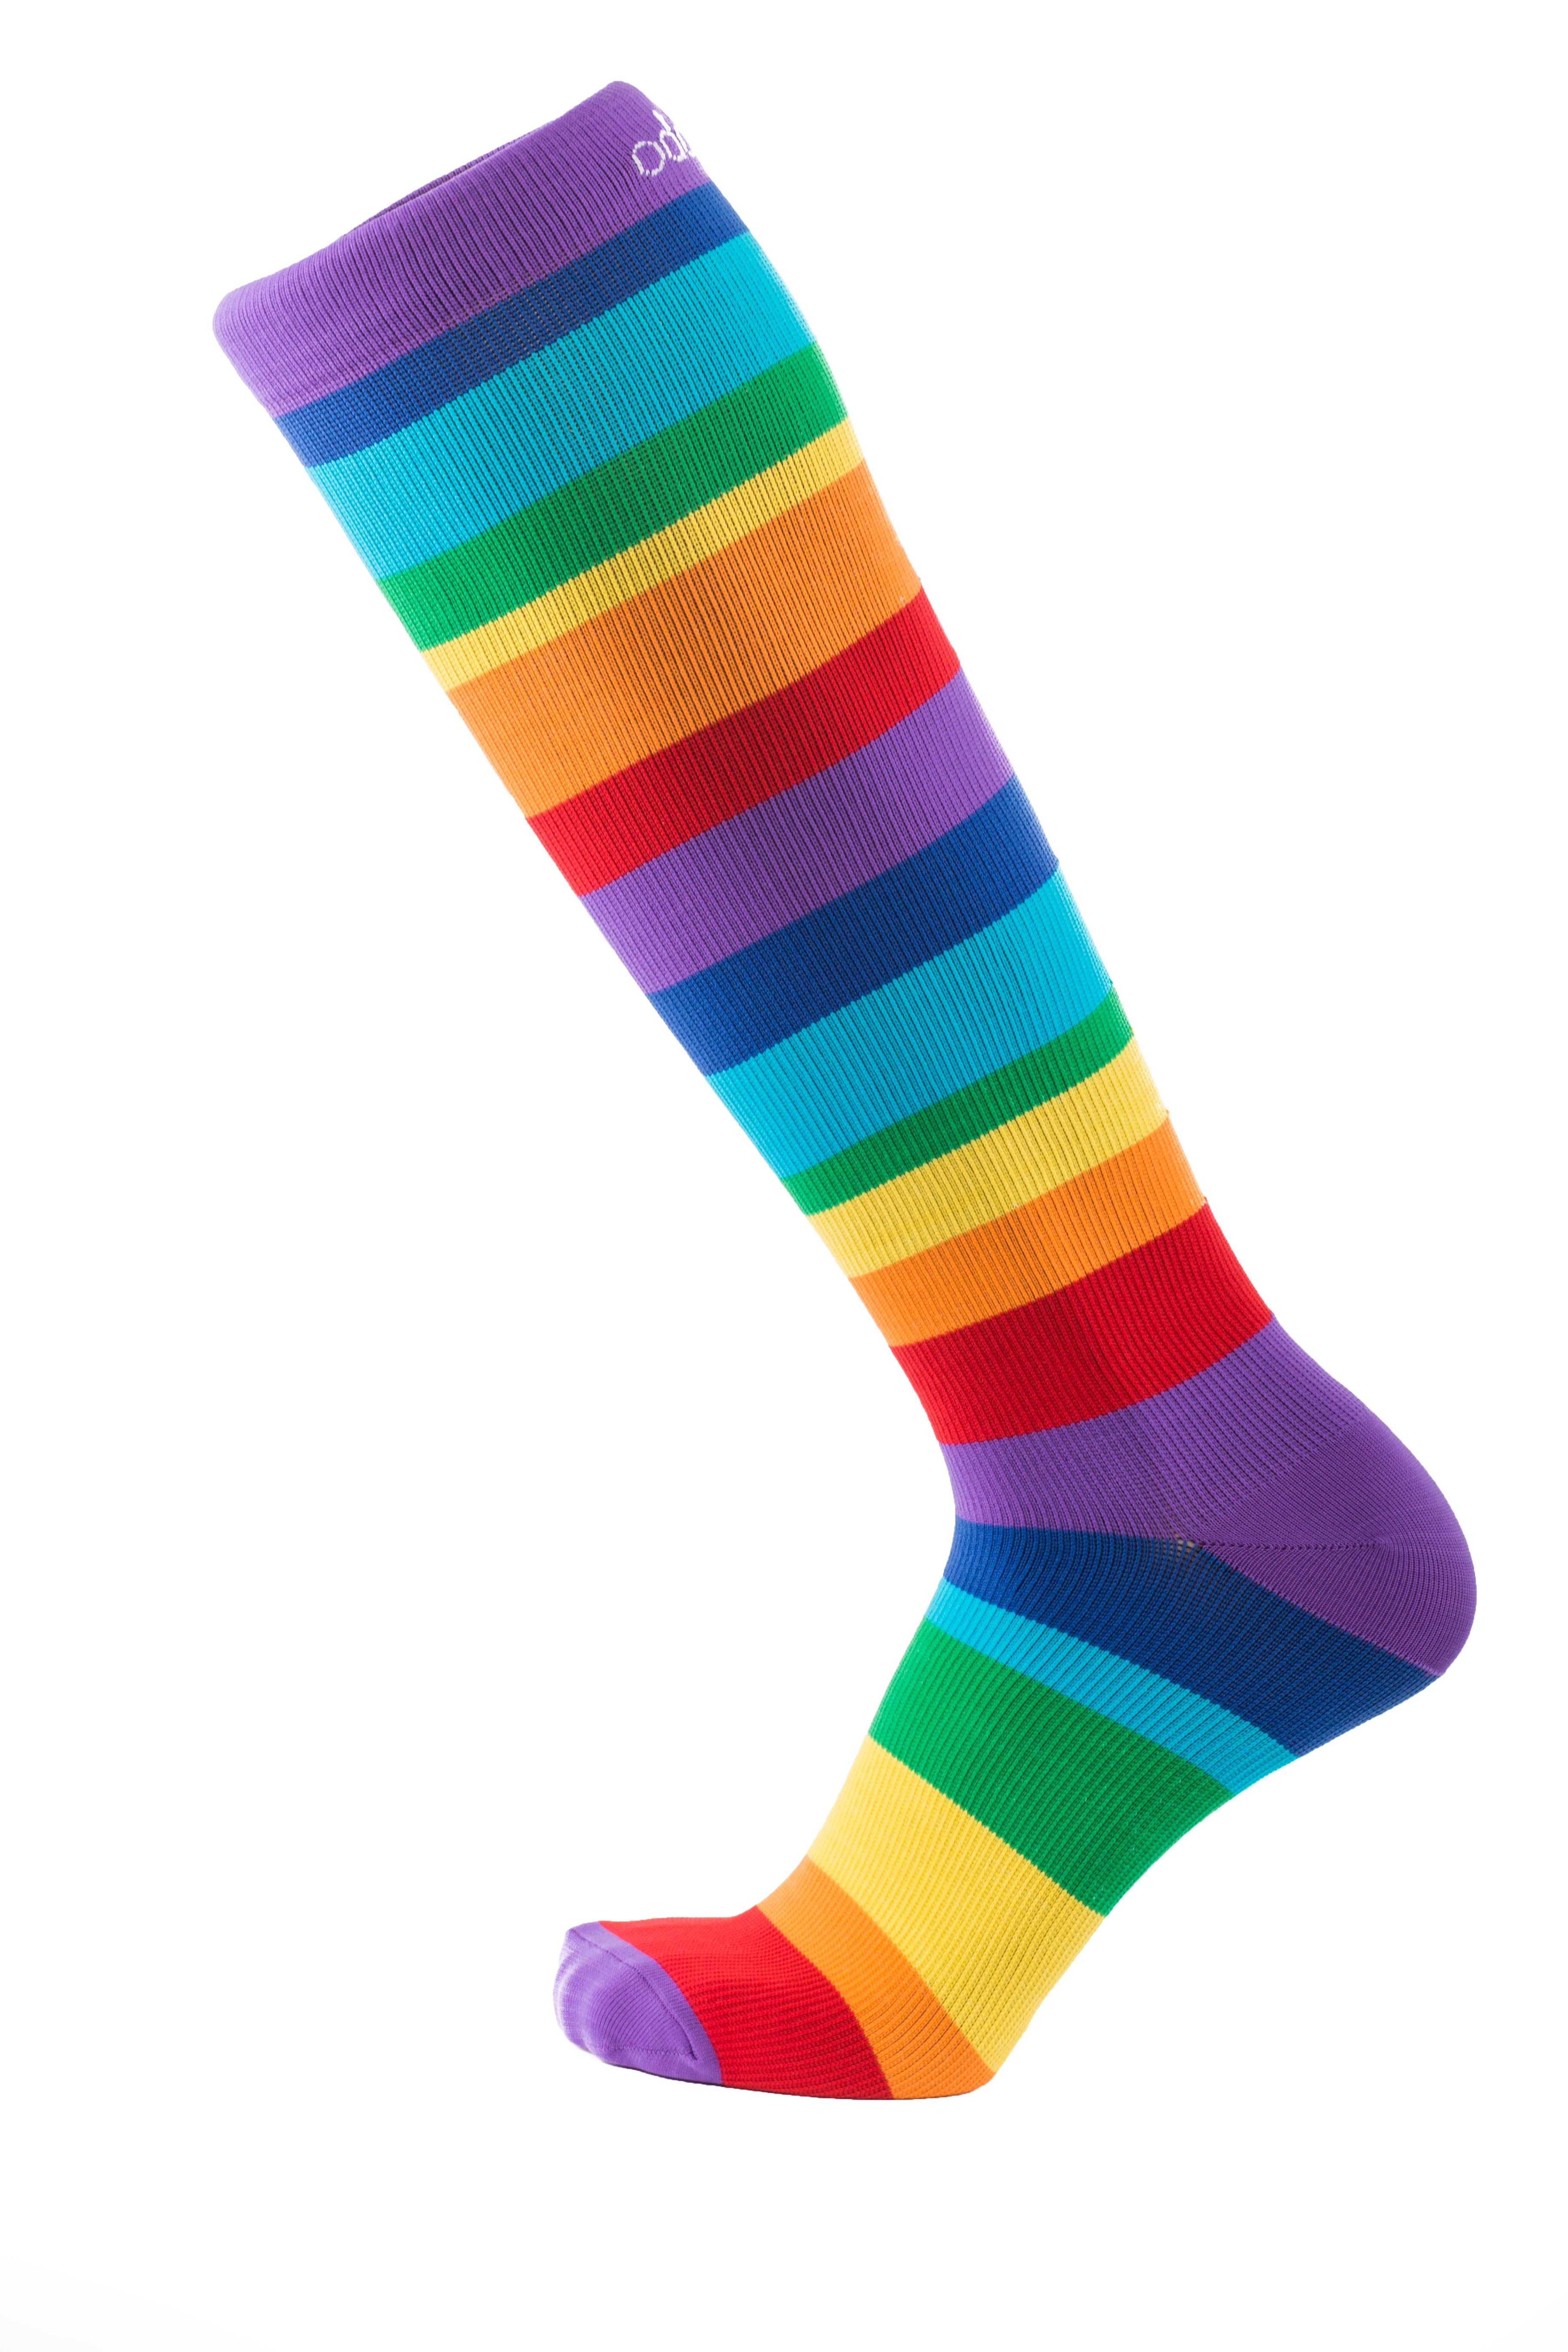 Lucky Pair (Rainbow) Compression Socks (15-20mmHg) - just below the kn ...